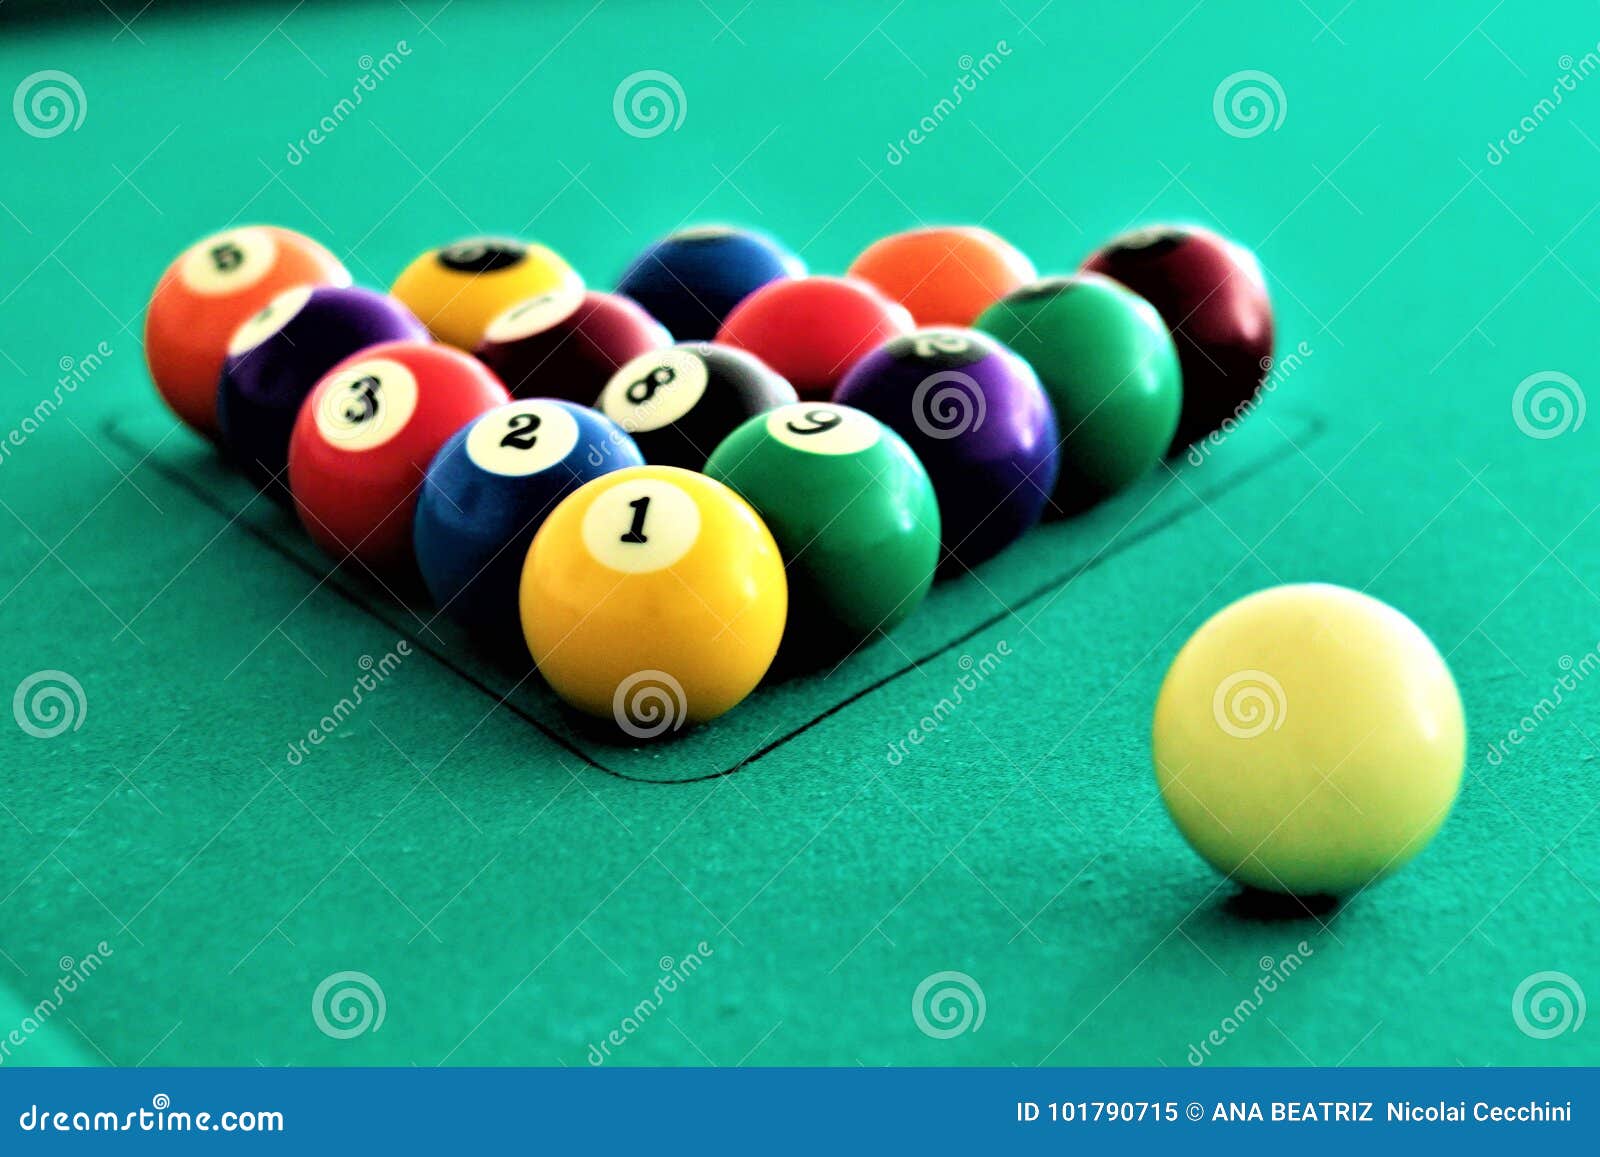 Billiards sinuca stock image. Image of variant, holes - 101790715